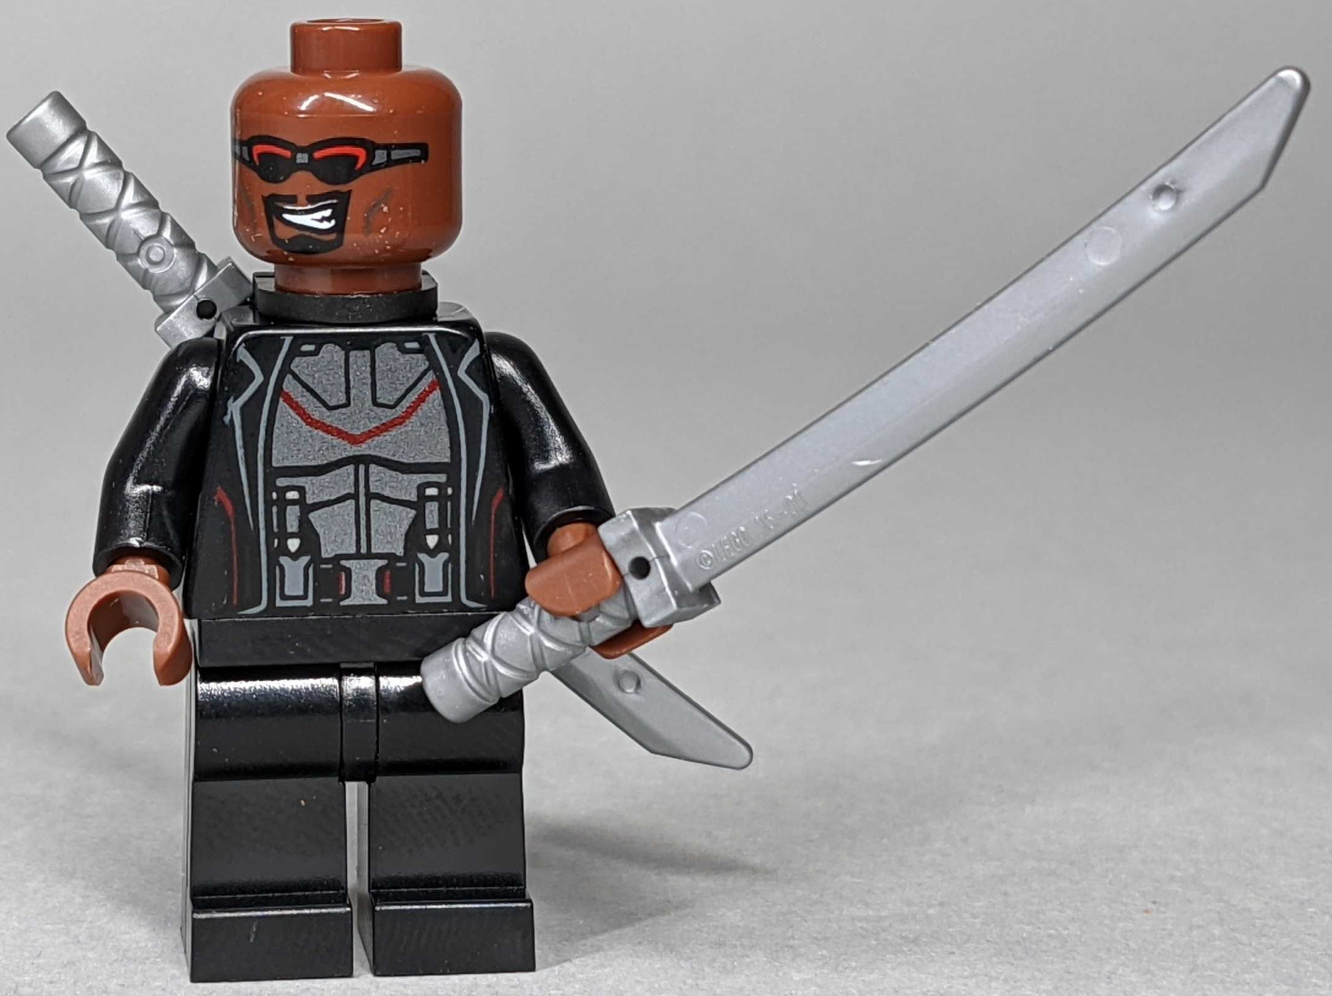 Mr. X - Brickipedia, the LEGO Wiki